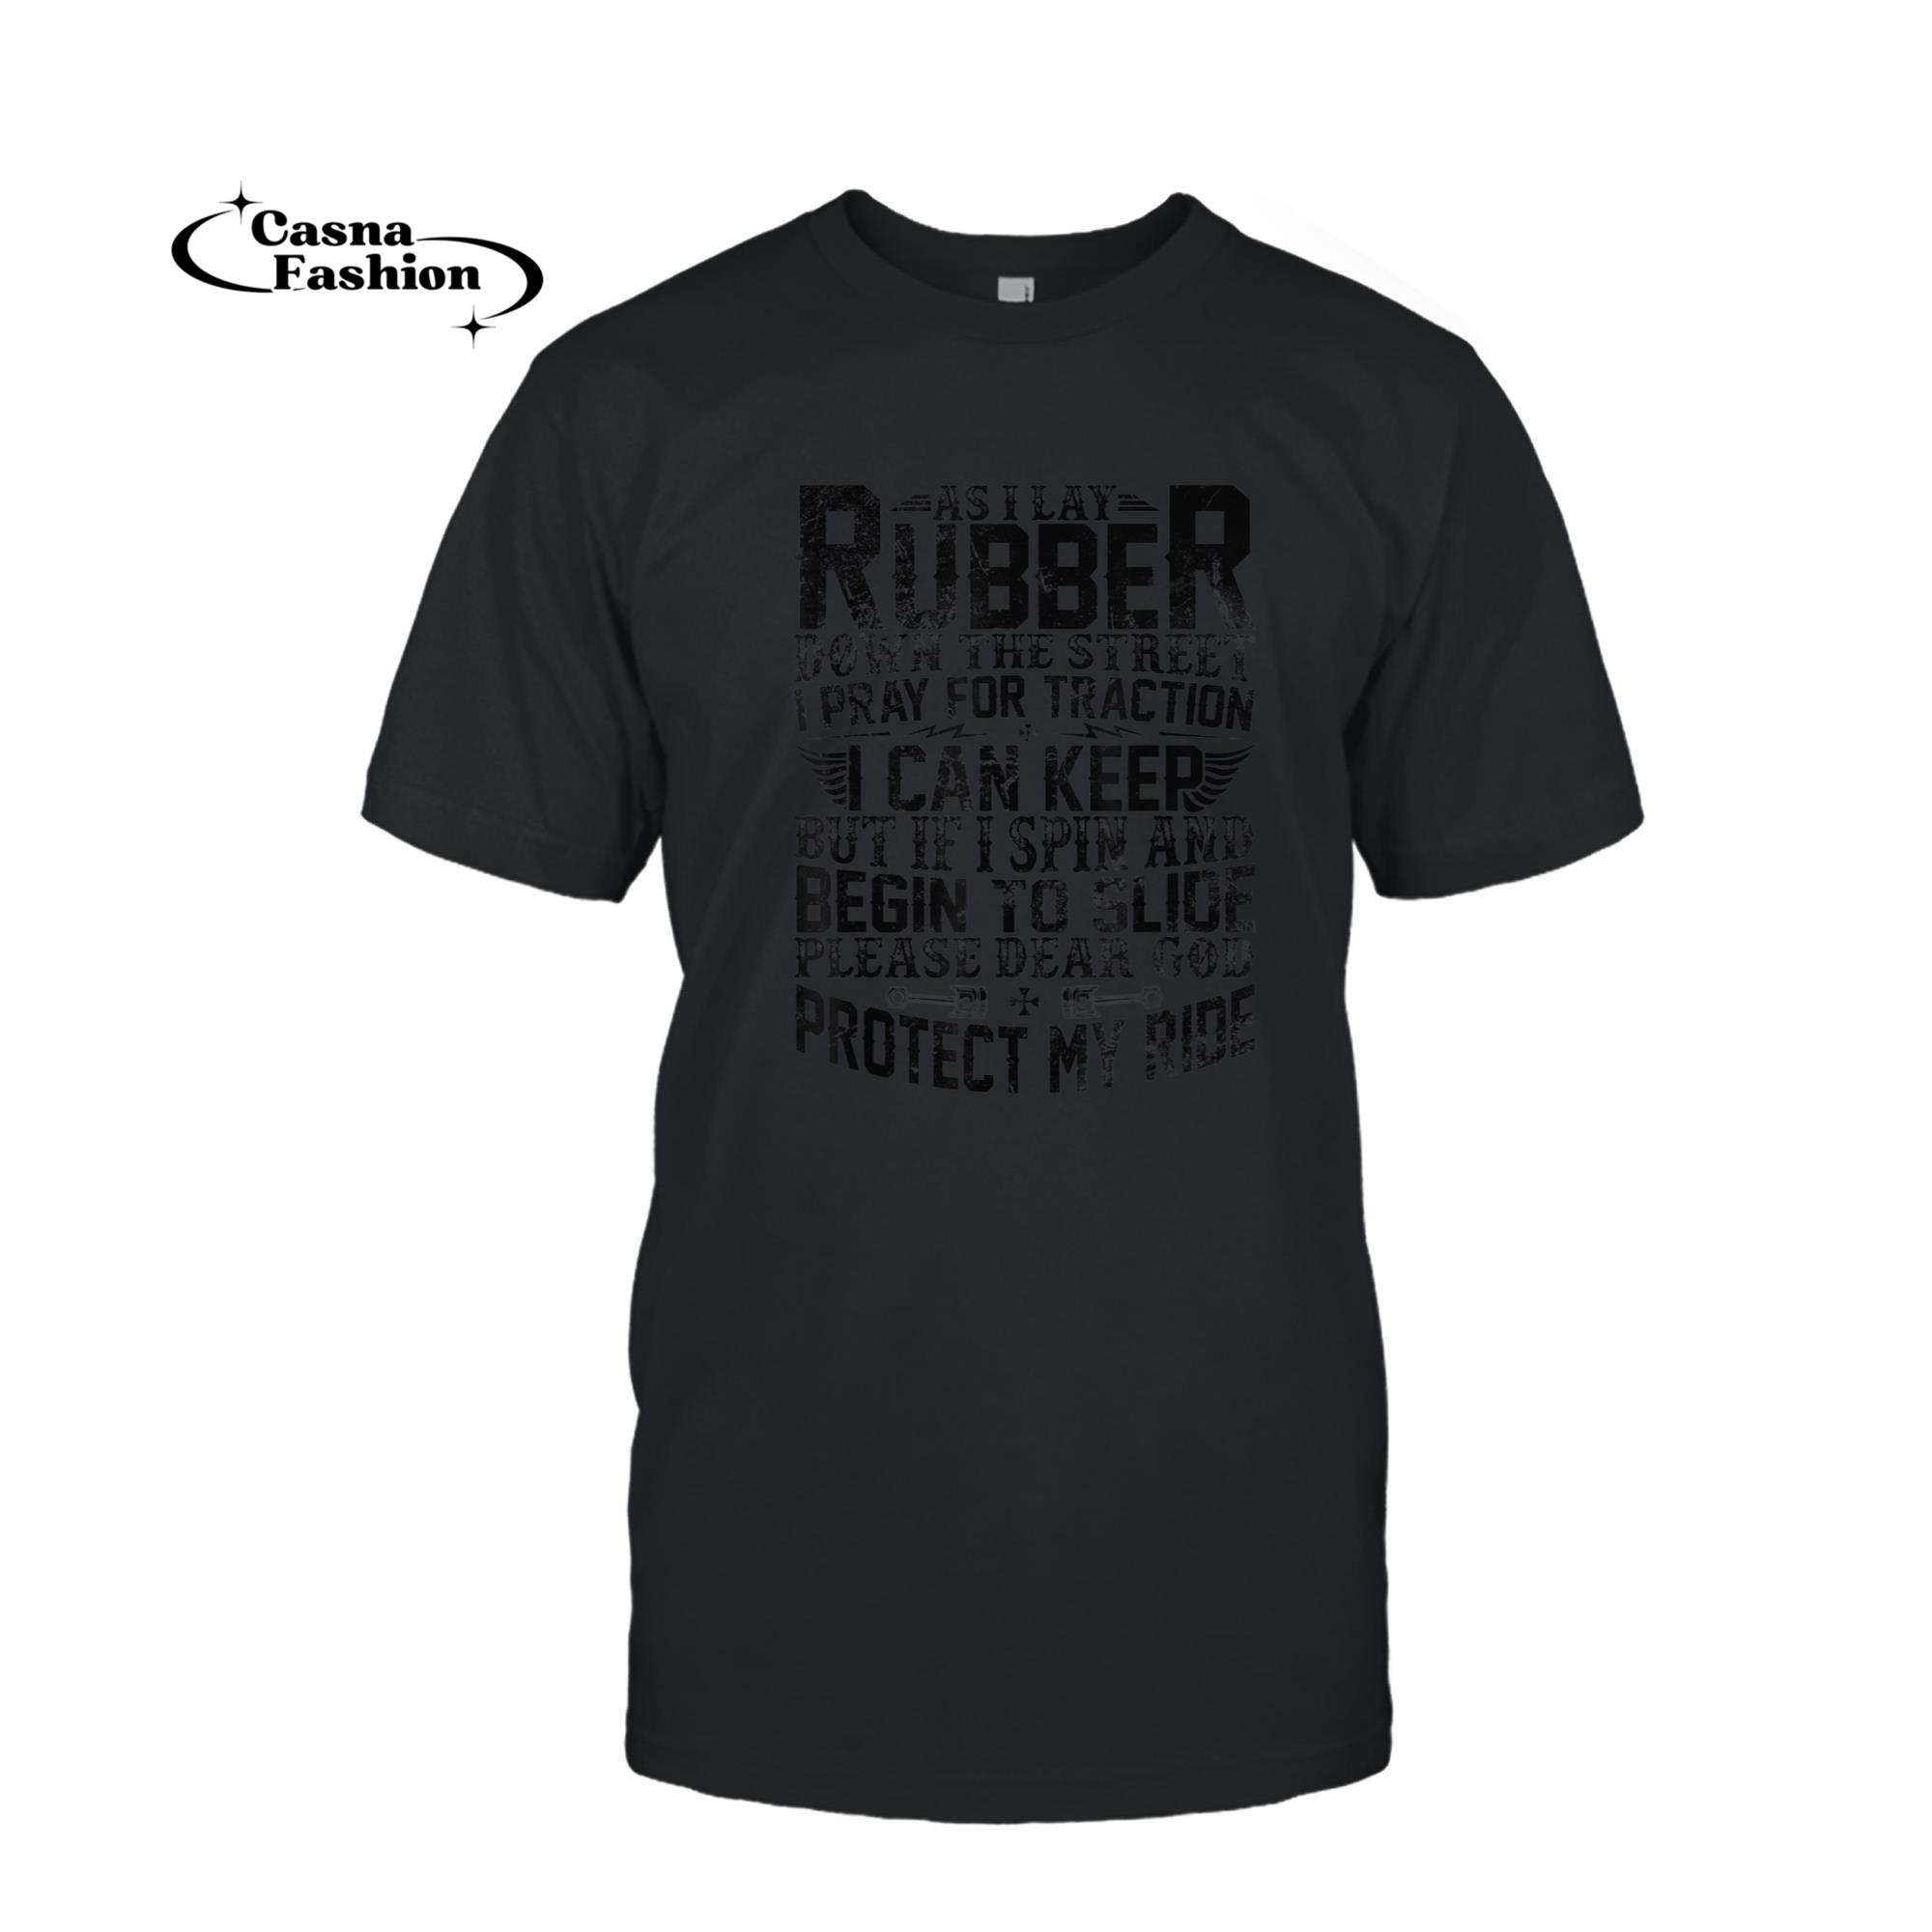 casnafashion_T-shirt_As I Lay Rubber Down The Street Bikers Love Racing T-Shirt_T-shirt_Black